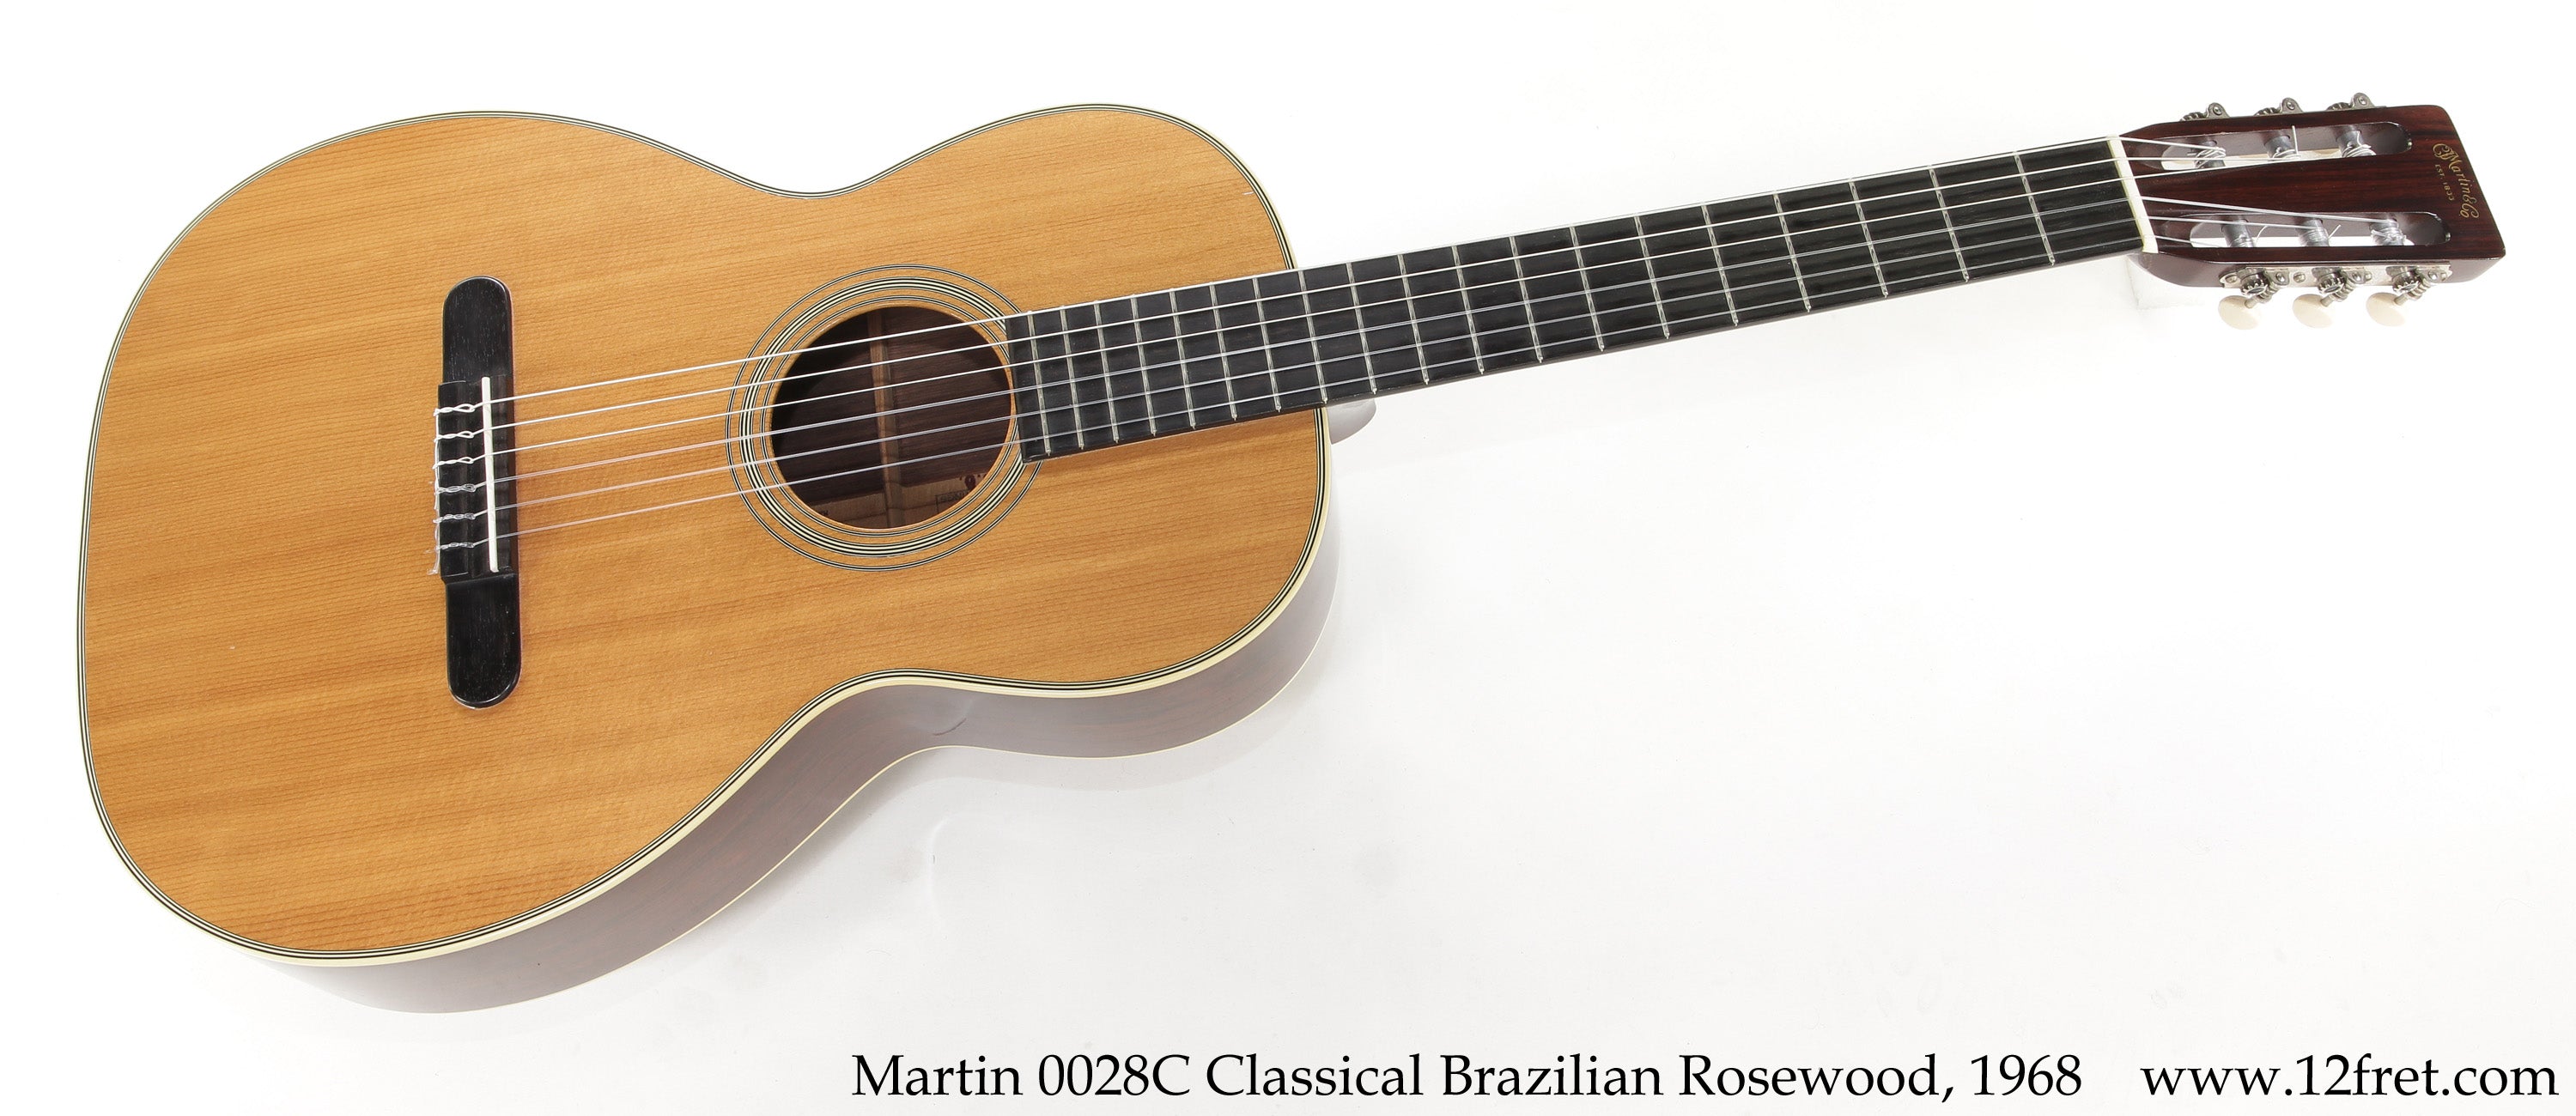 Martin 00-28C Classical Brazilian Rosewood, 1968 - The Twelfth Fret